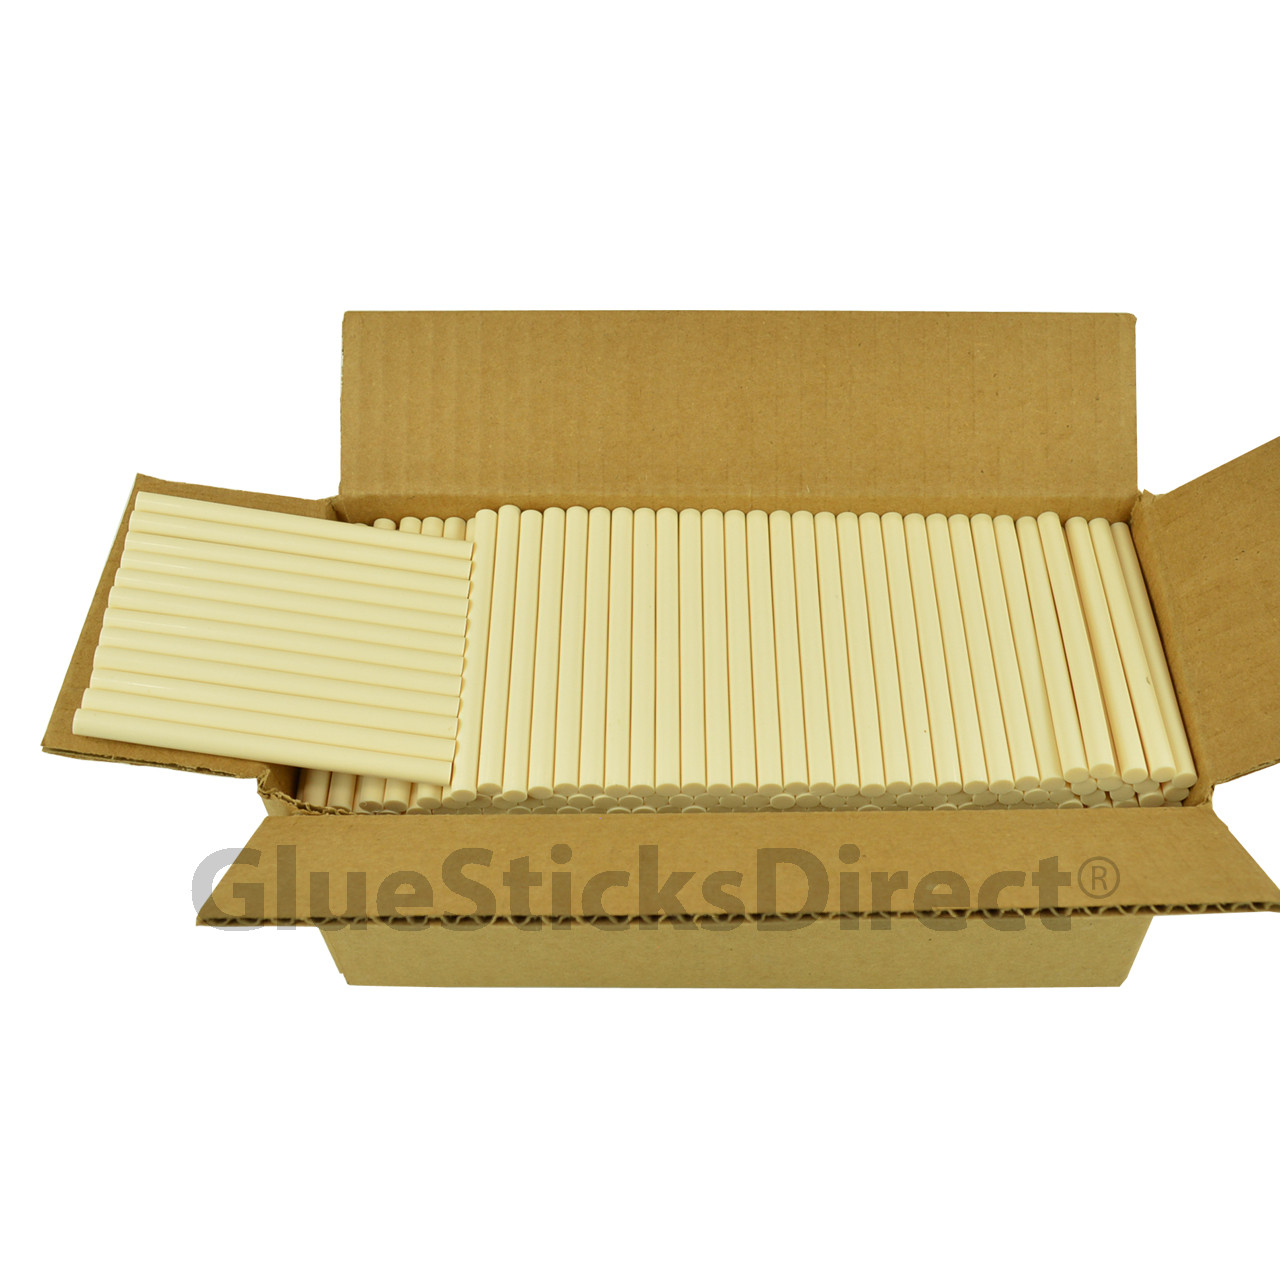 GlueSticksDirect Ivory Colored Glue Sticks 5/16" X 4" 5 lbs